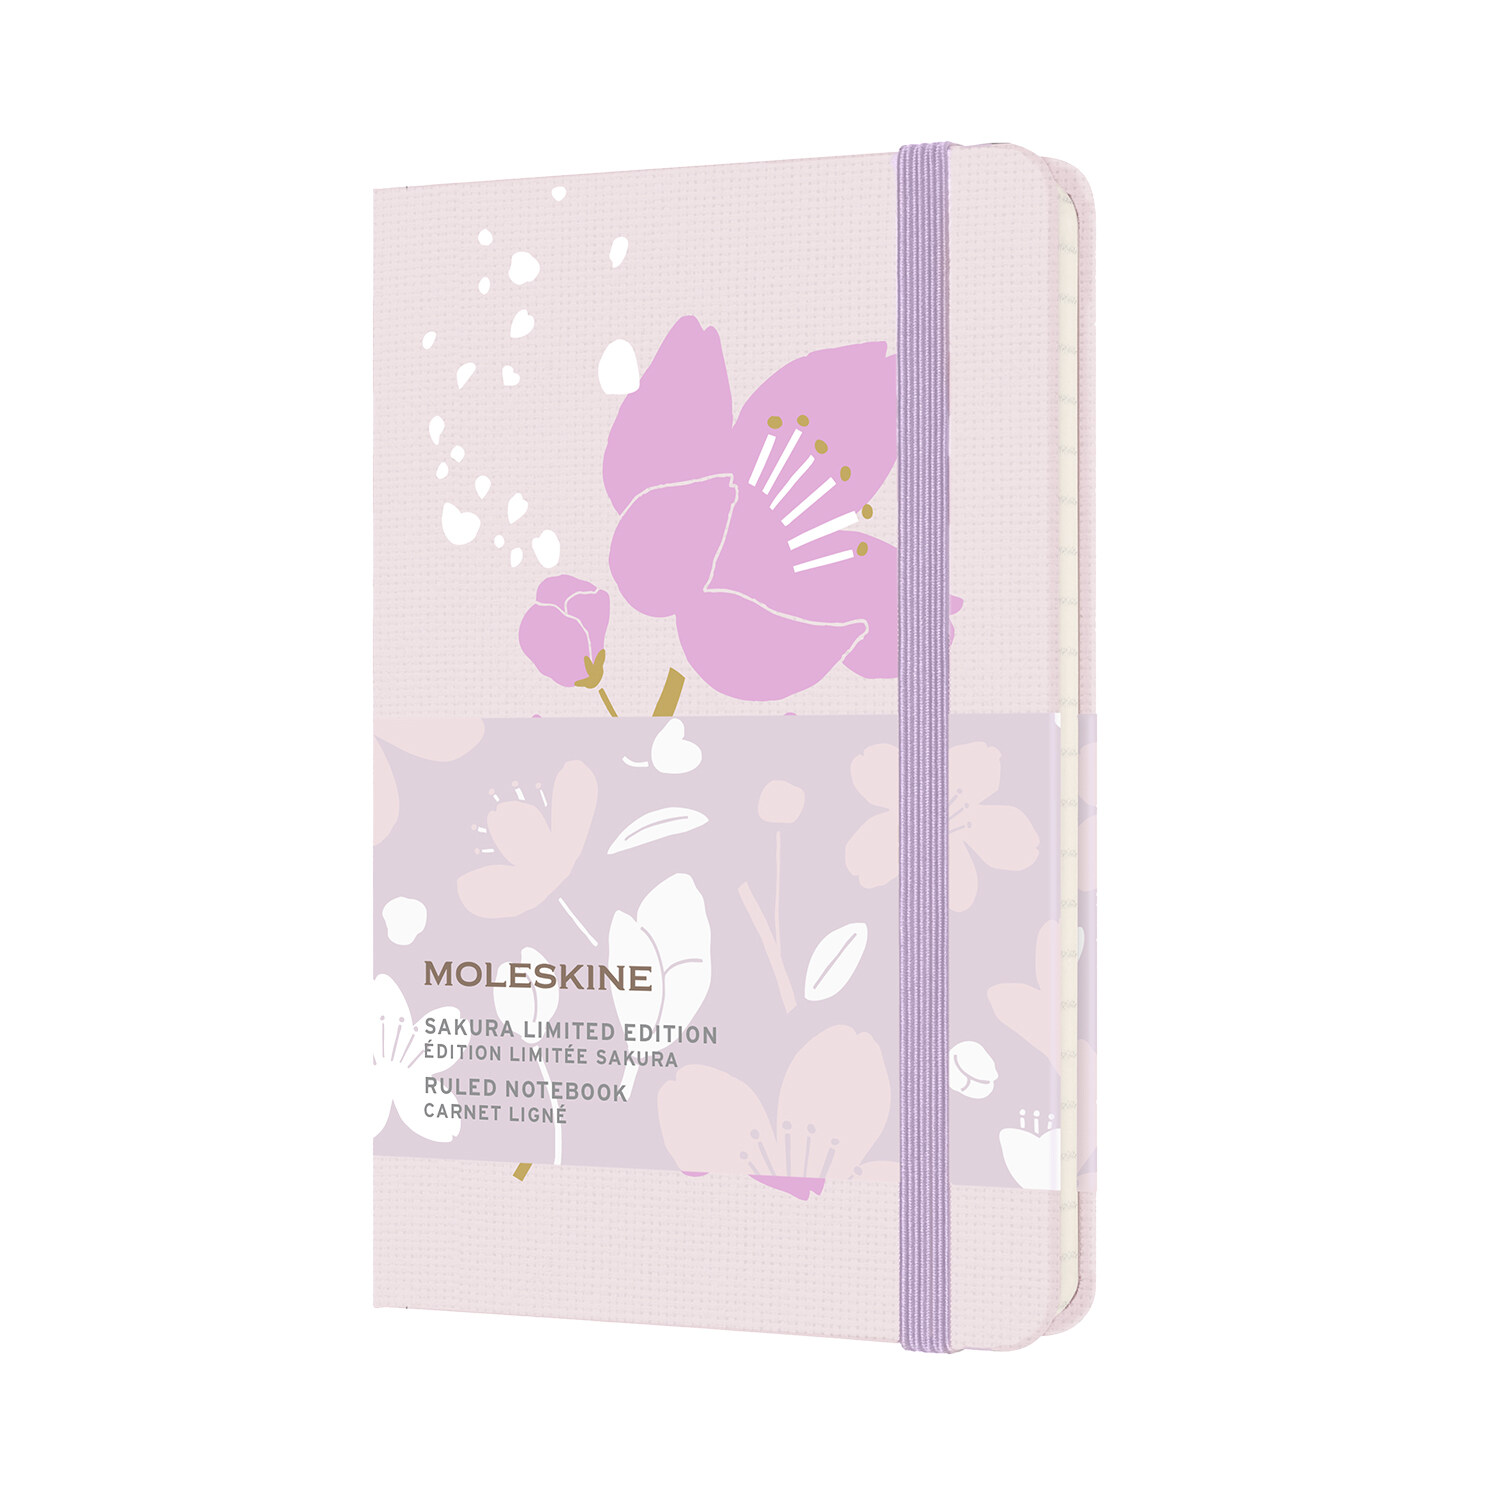 Moleskine Limited Edition Sakura Notebook, Pocket, Ruled, Light Pink, Hard Cover (3.5 X 5.5) (Hardcover)